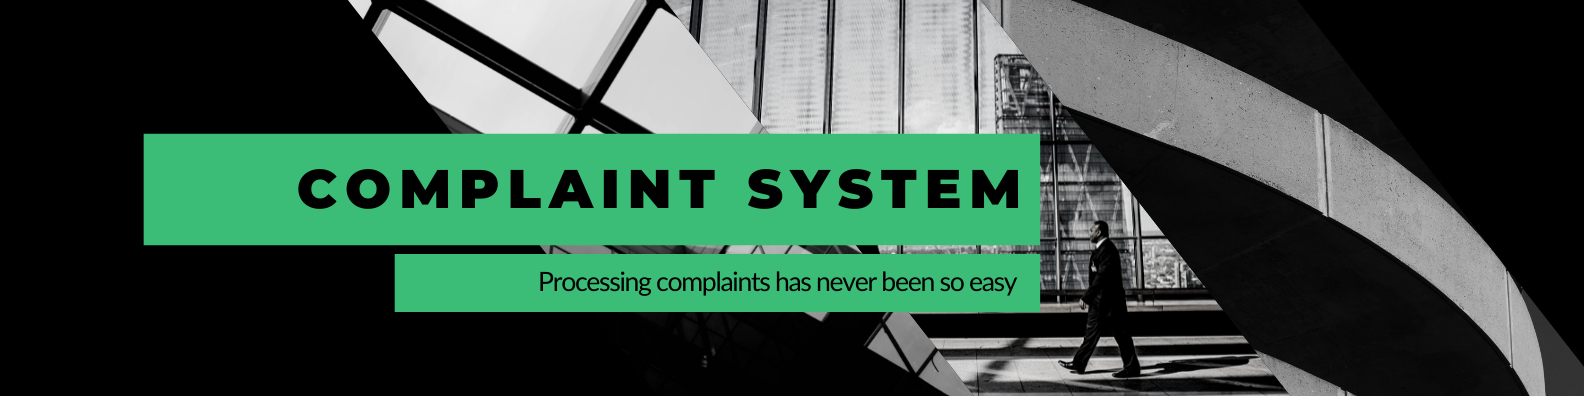 complain system header